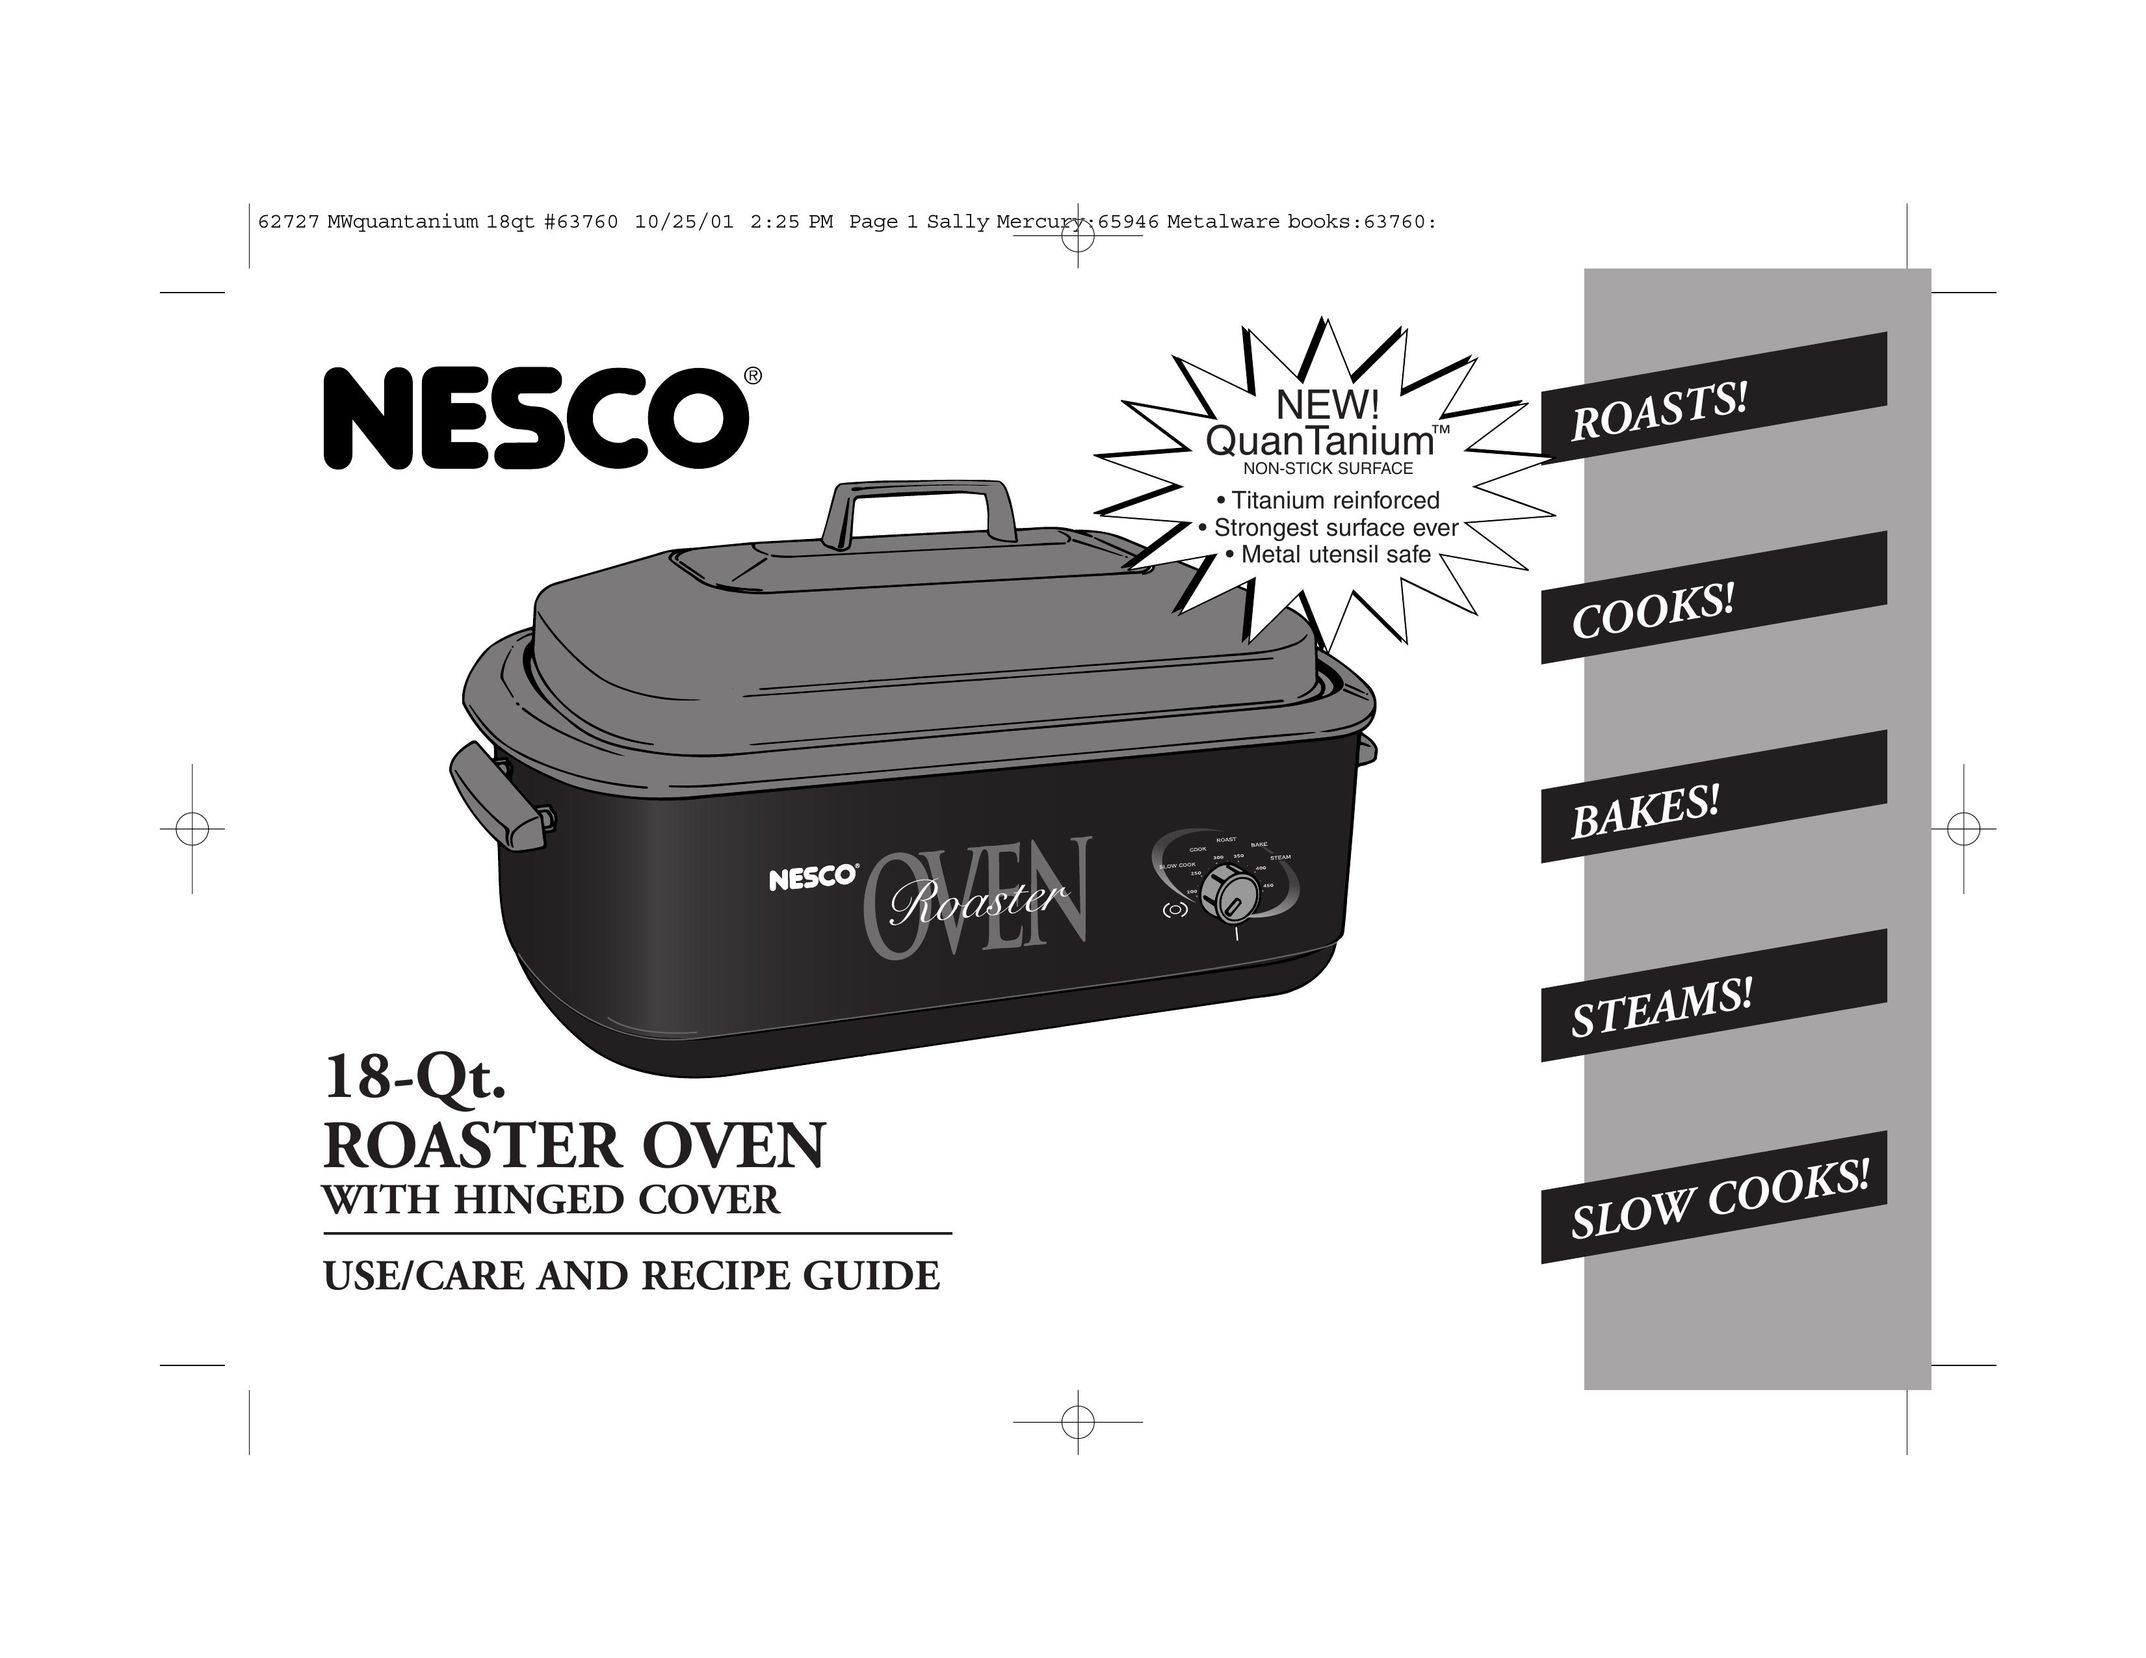 Nesco 18-Qt. Oven User Manual